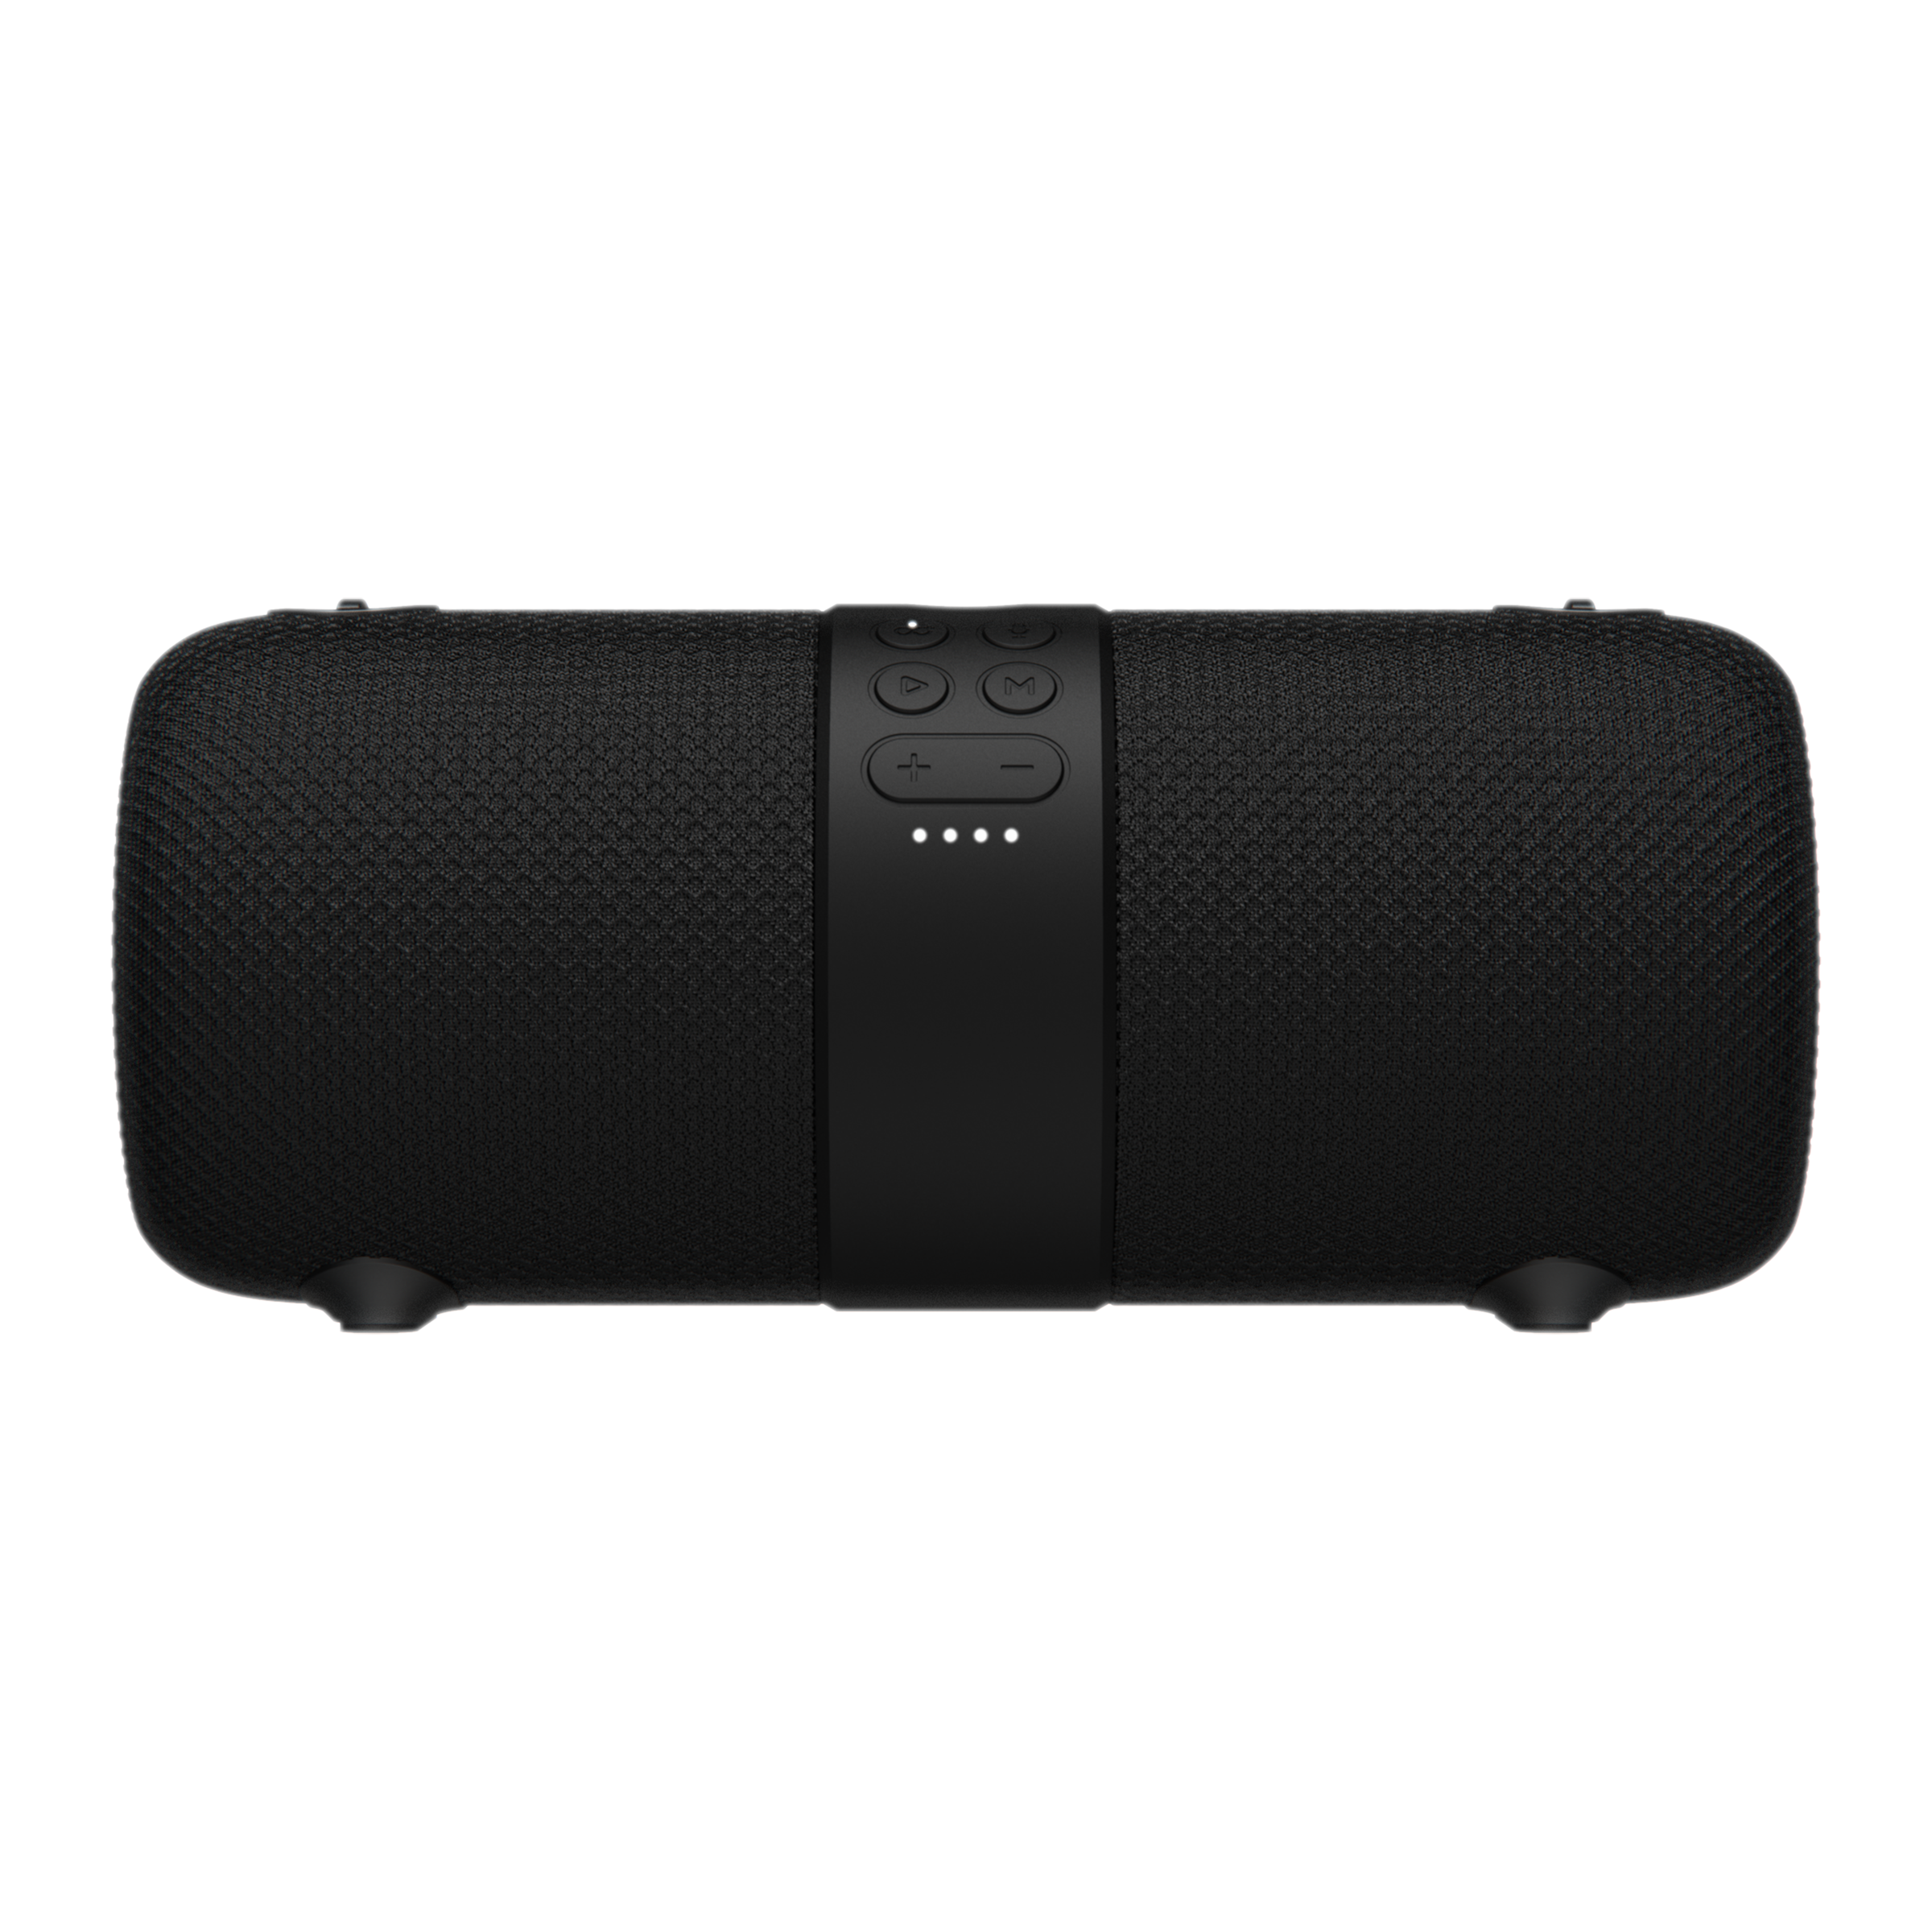 boAt Stone 1200 14W Portable Bluetooth Speaker (IPX7 Waterproof, 9 Hours Playtime, 2.0 Channel, Black)